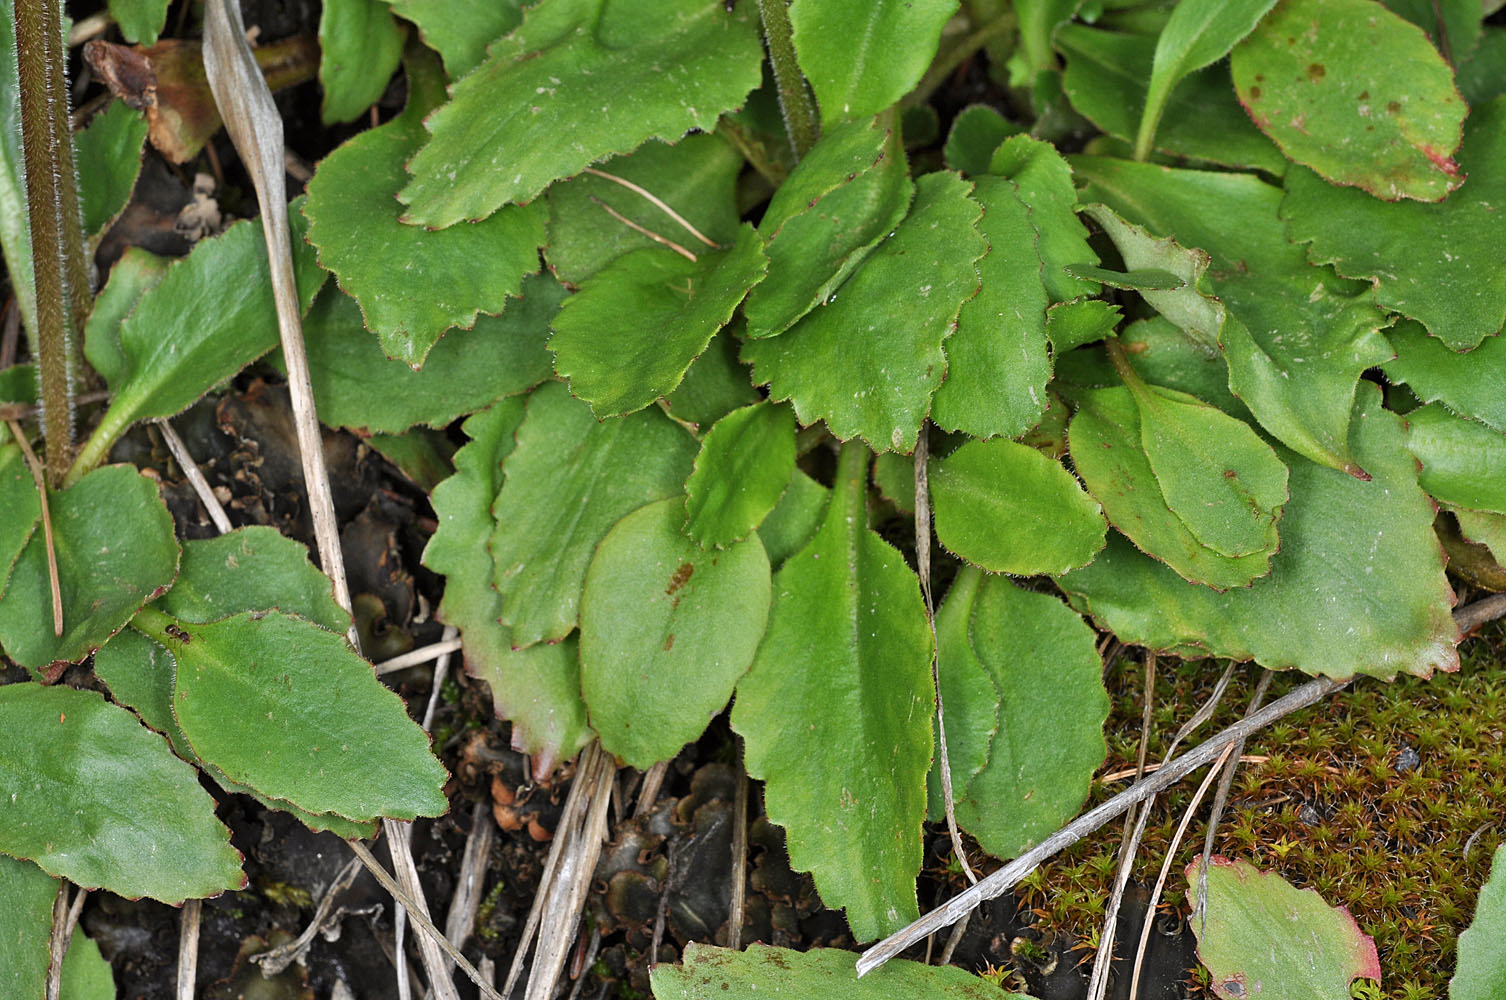 Flora of Eastern Washington Image: Micranthes occidentalis